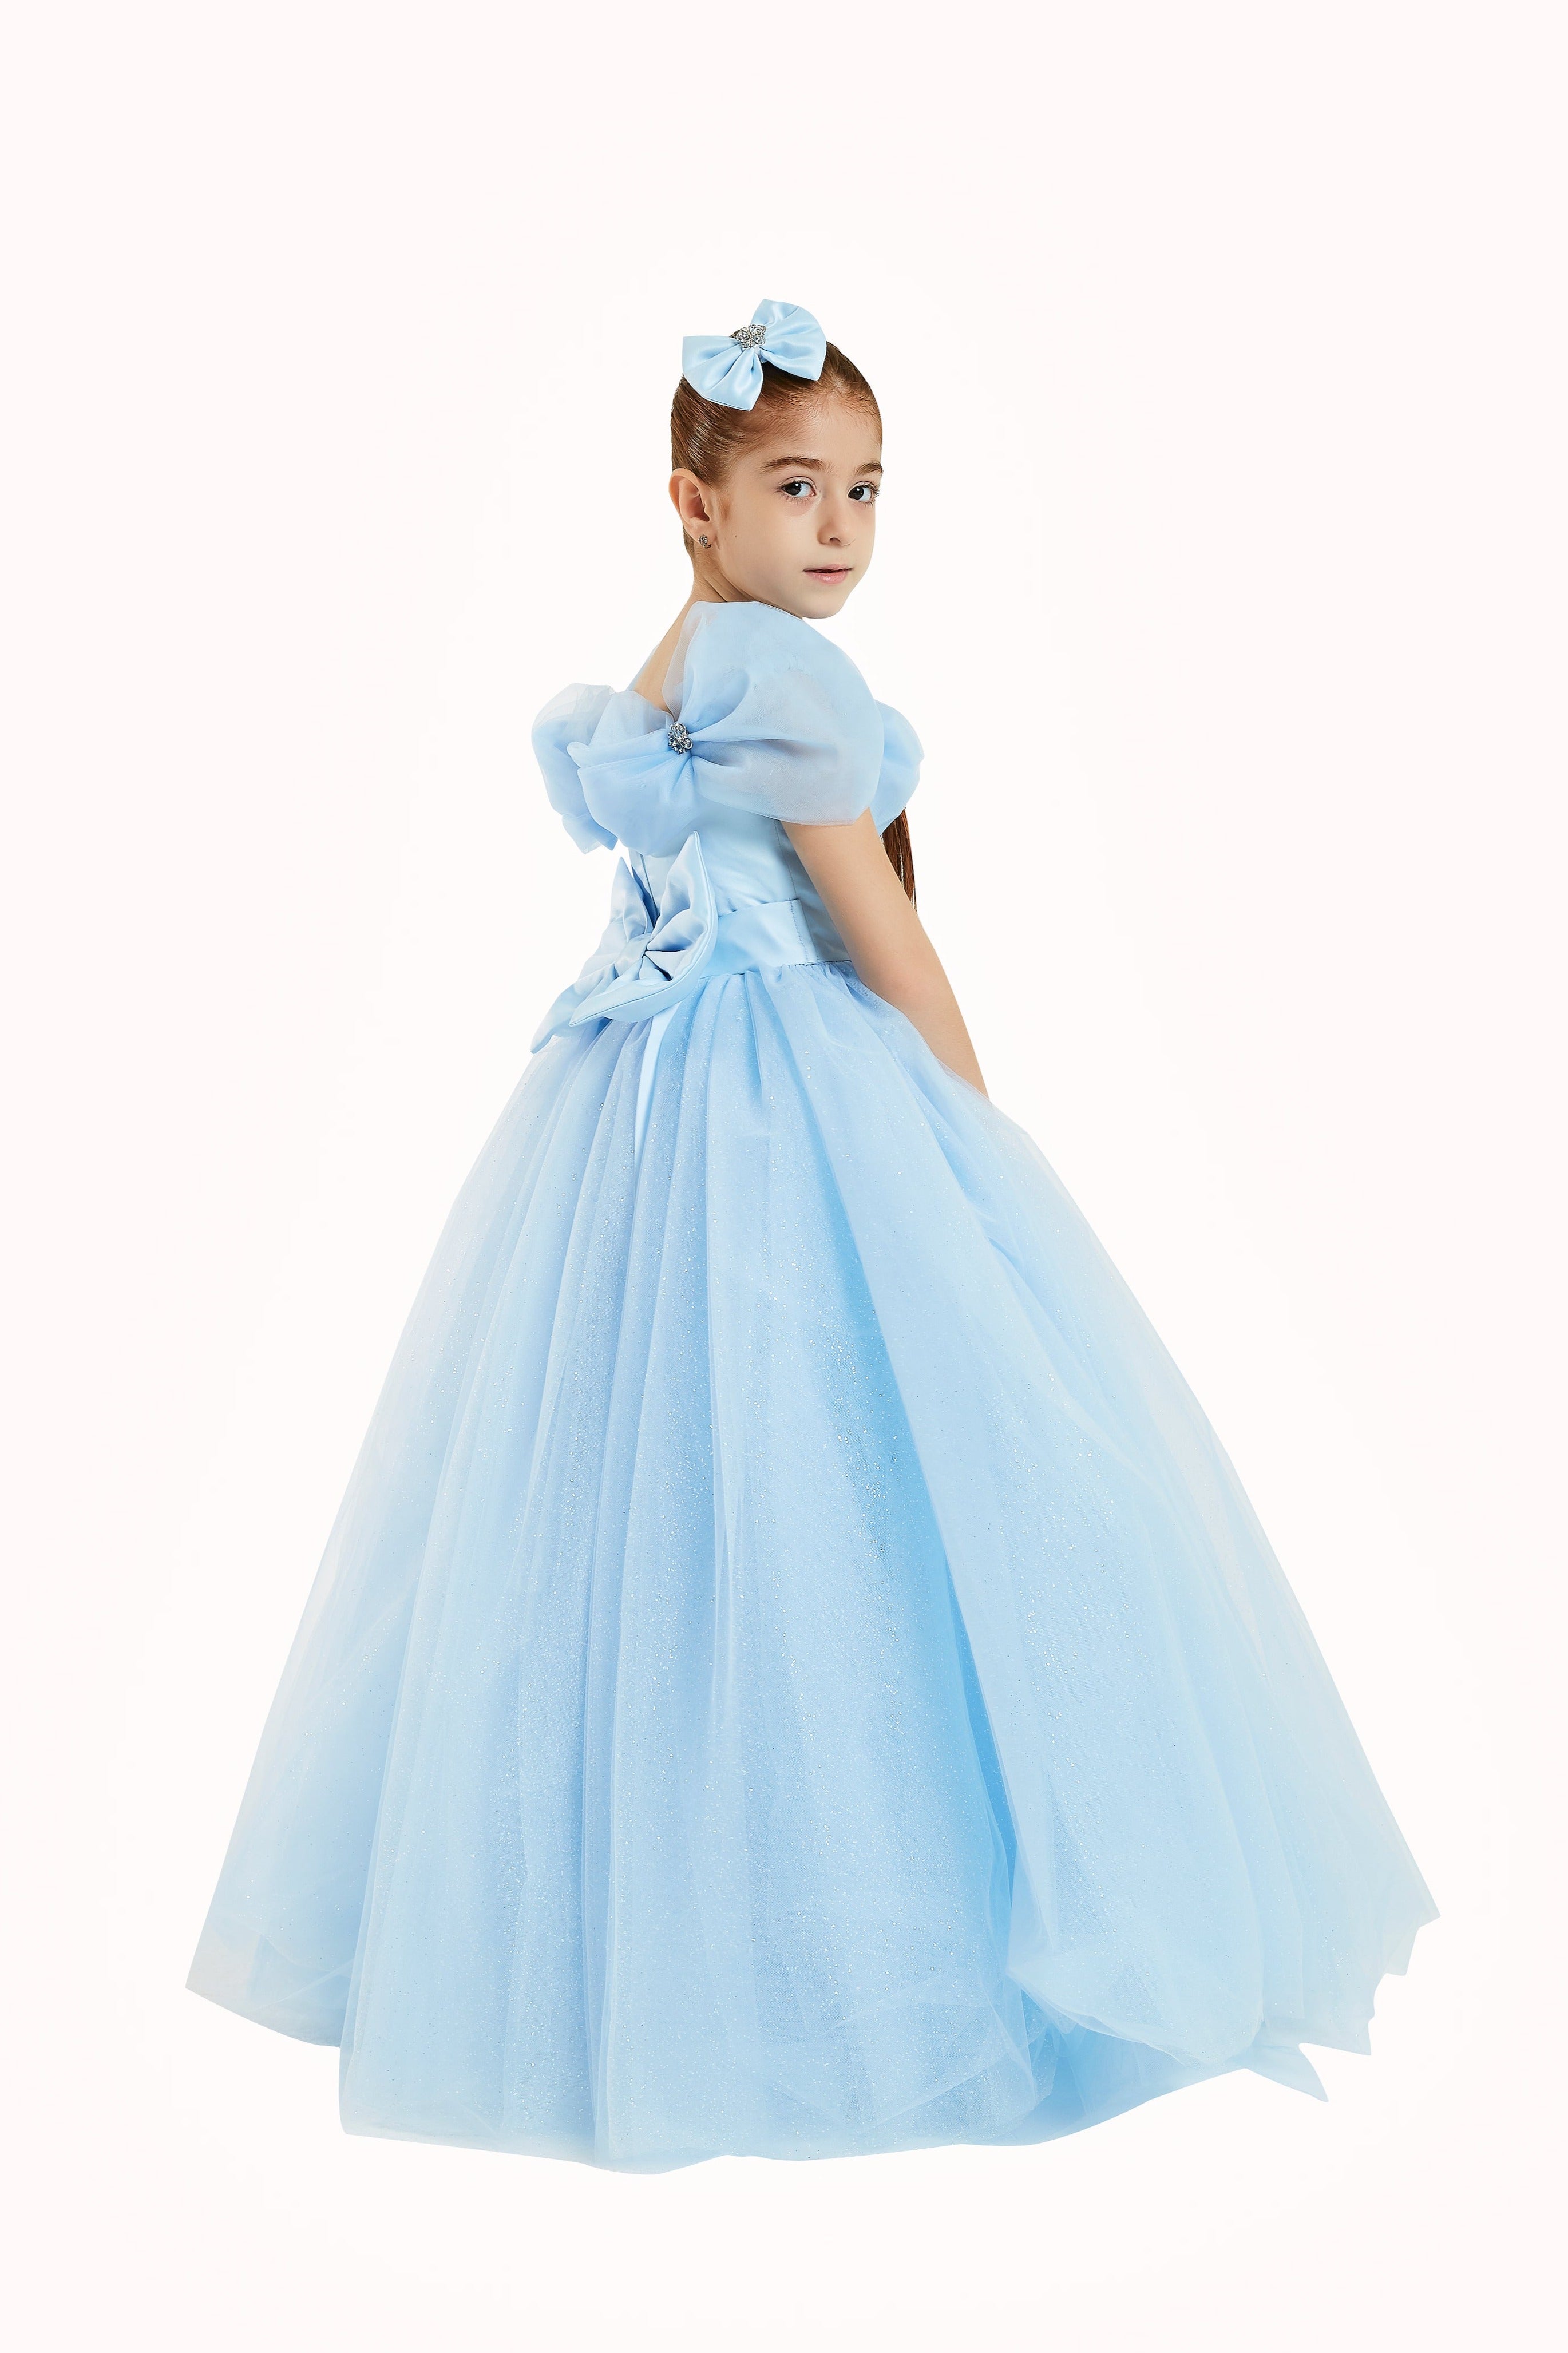 Cinderella inspired dress